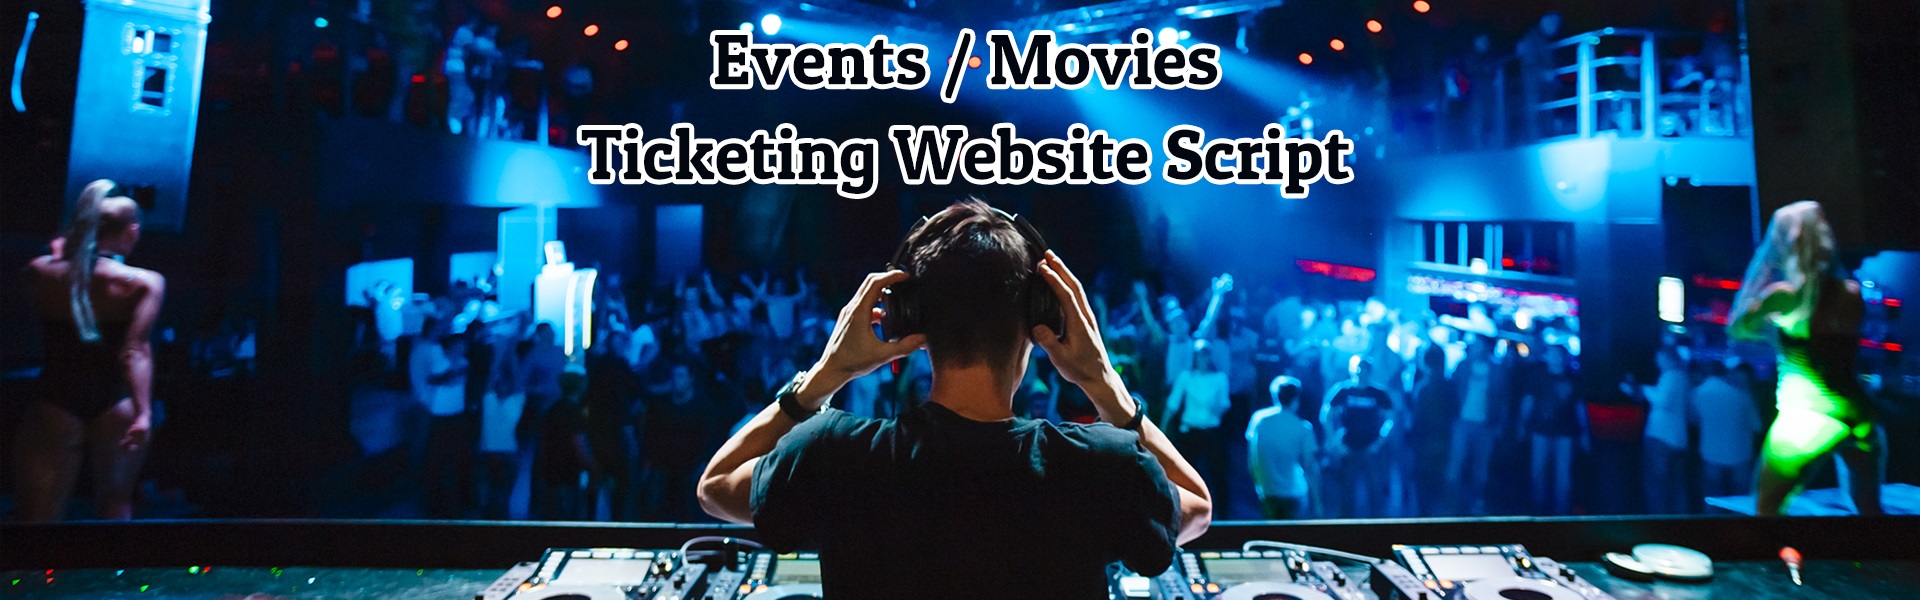 Events Ticketing Website Script